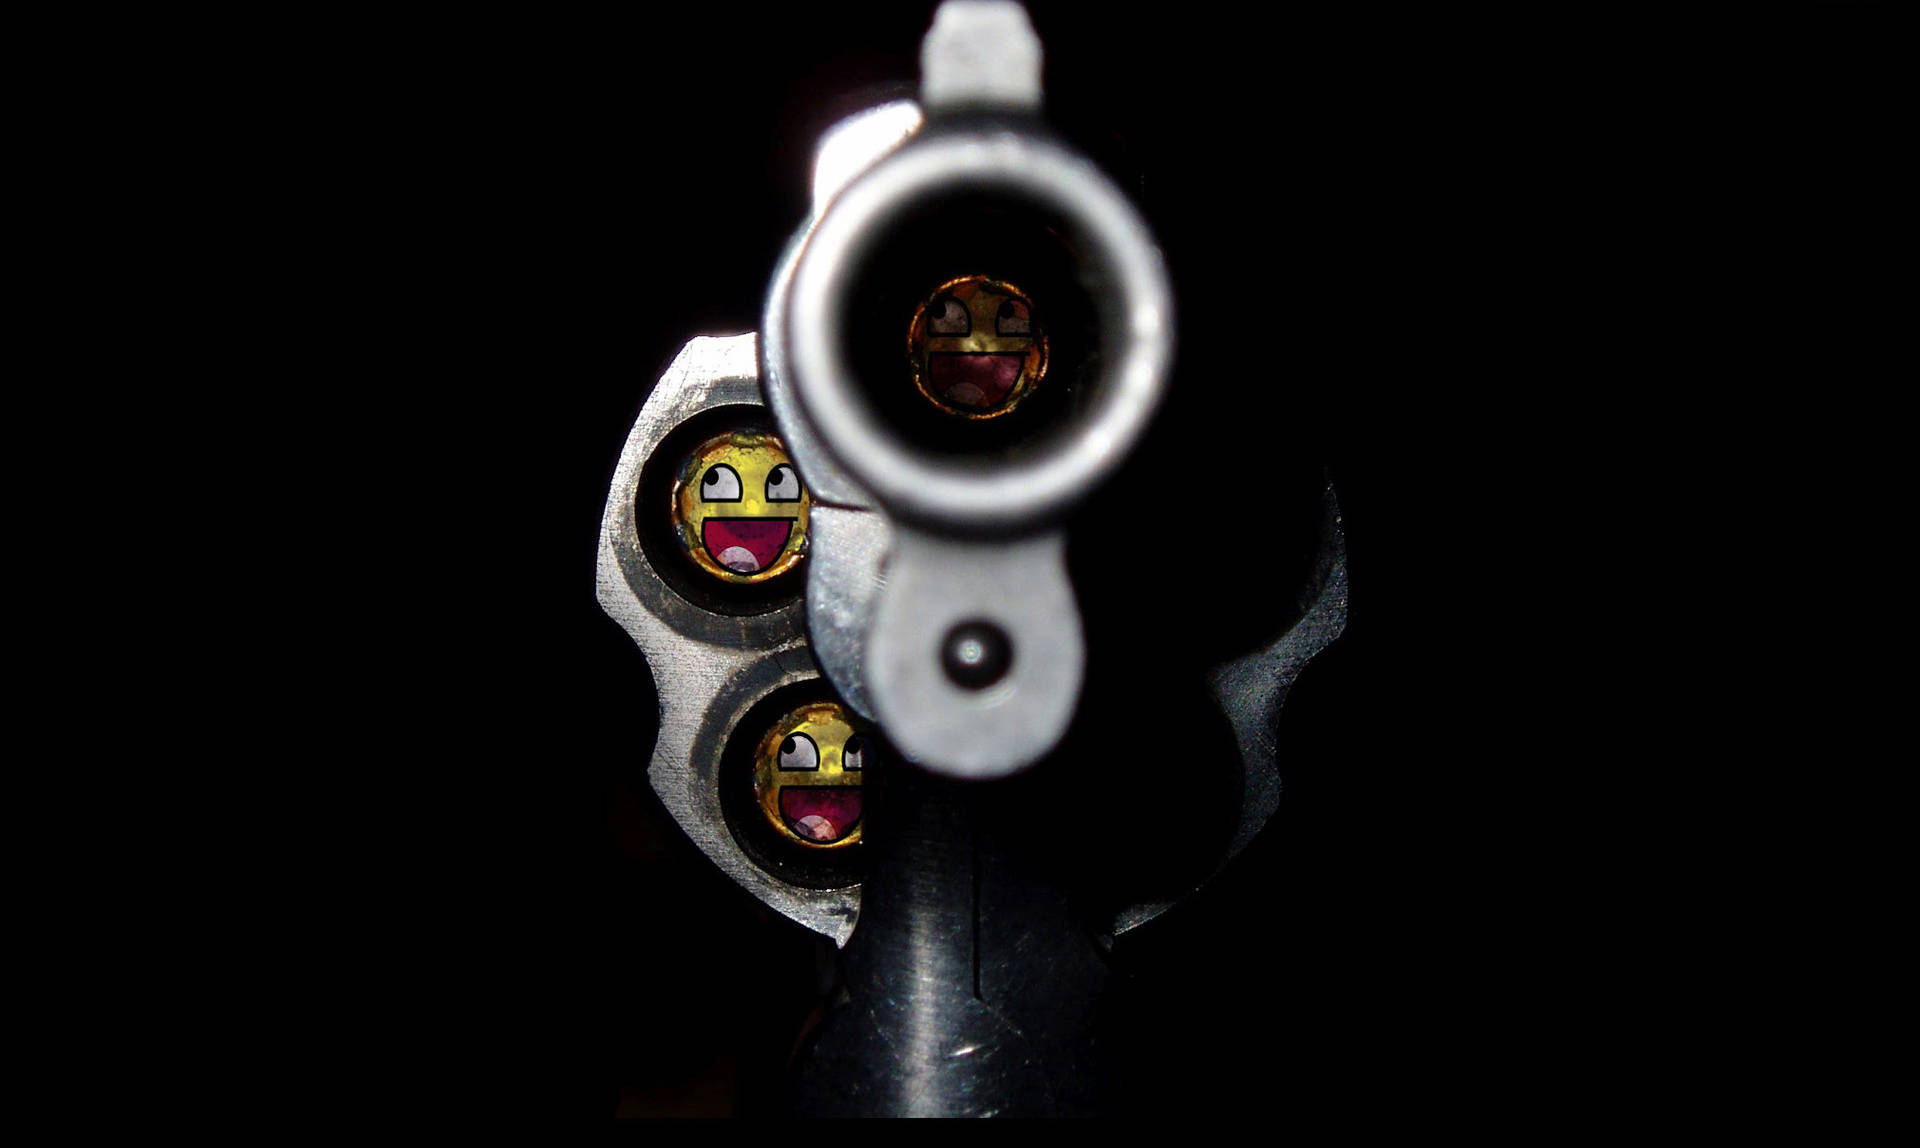 Gun With Epic Smiley Face Bullets Meme Wallpaper